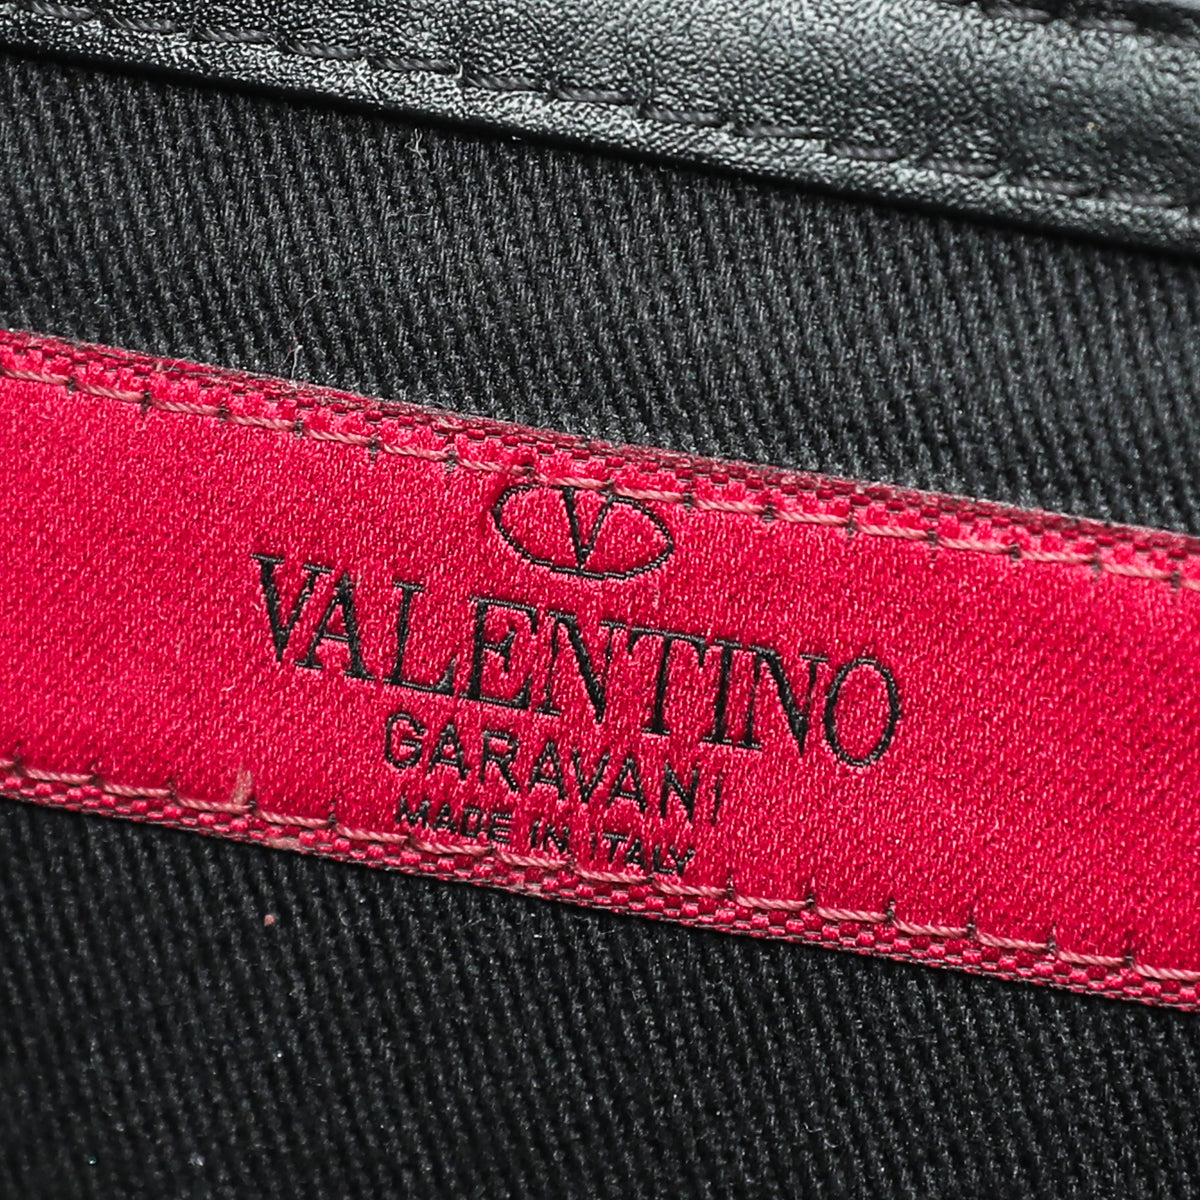 Valentino Black Glam Lock Small Flap Chain Bag